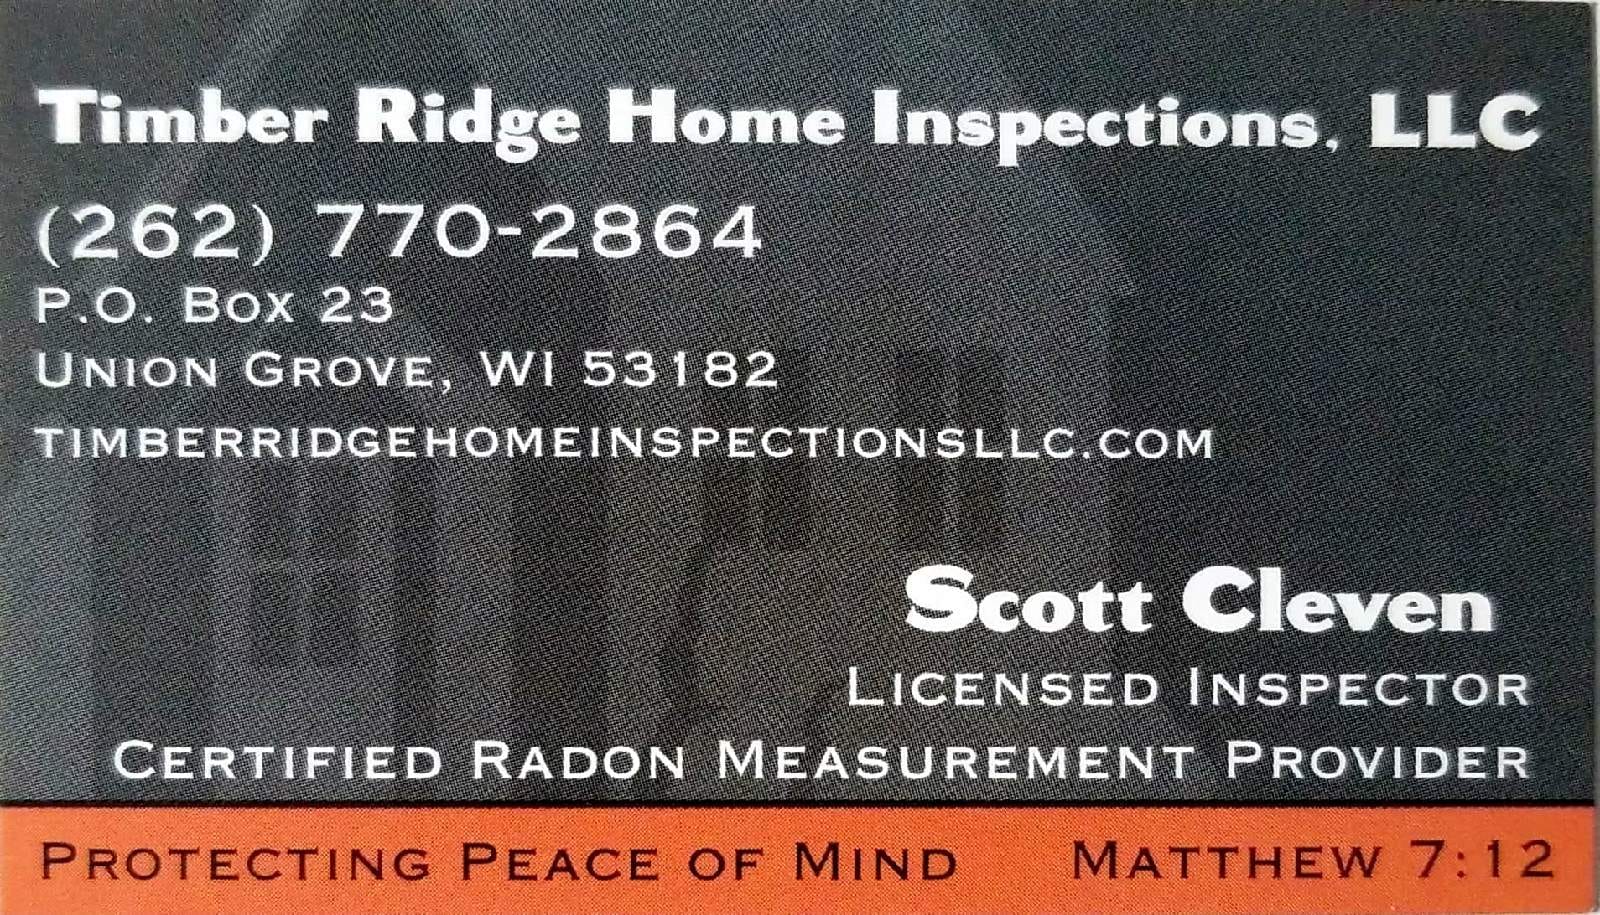 Timber Ridge Home Inspections LLC 1090 White Oak Dr, Union Grove Wisconsin 53182